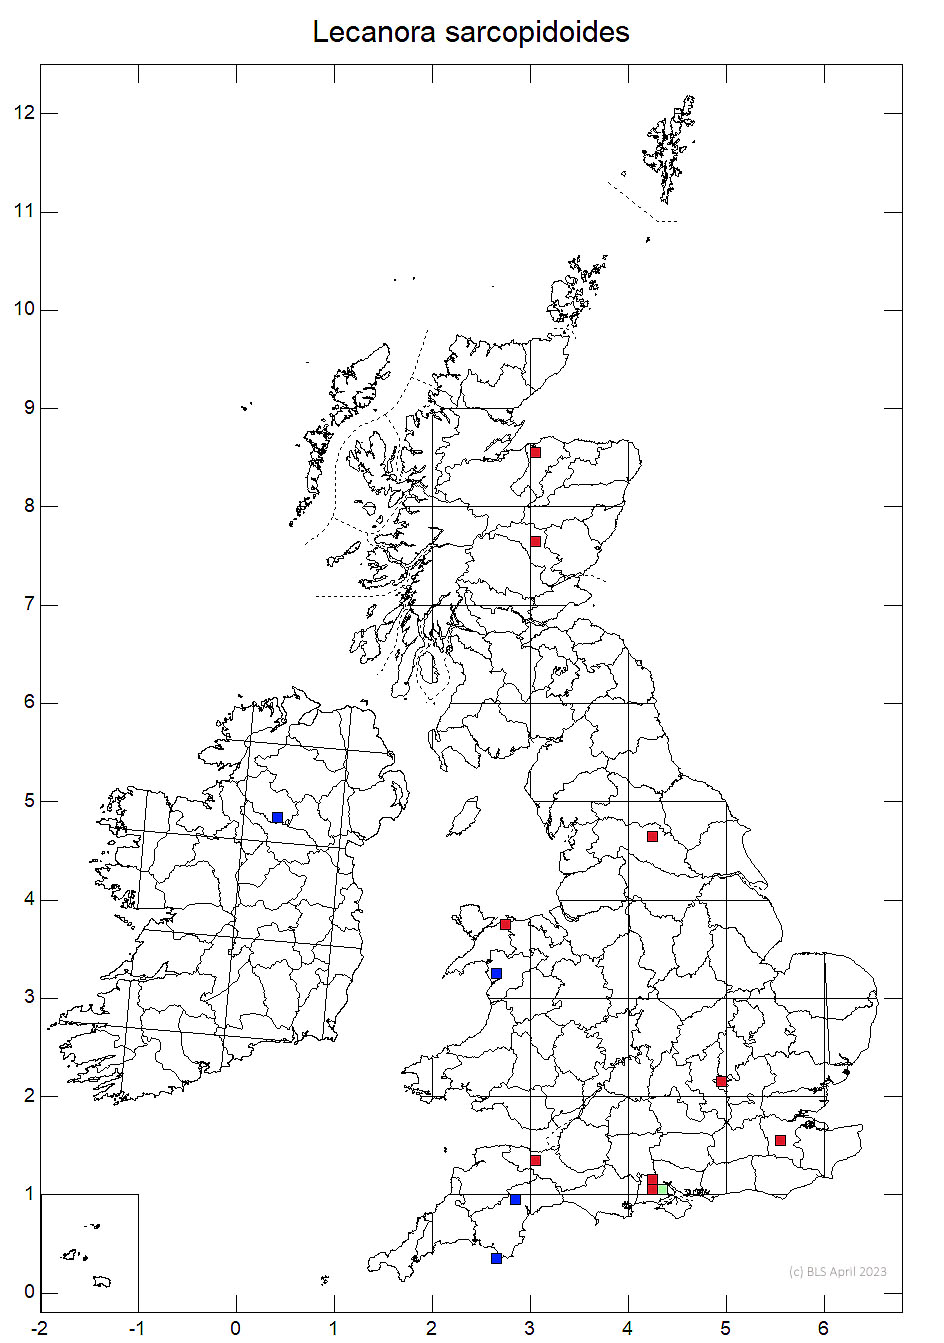 Lecanora sarcopidoides 10km sq distribution map